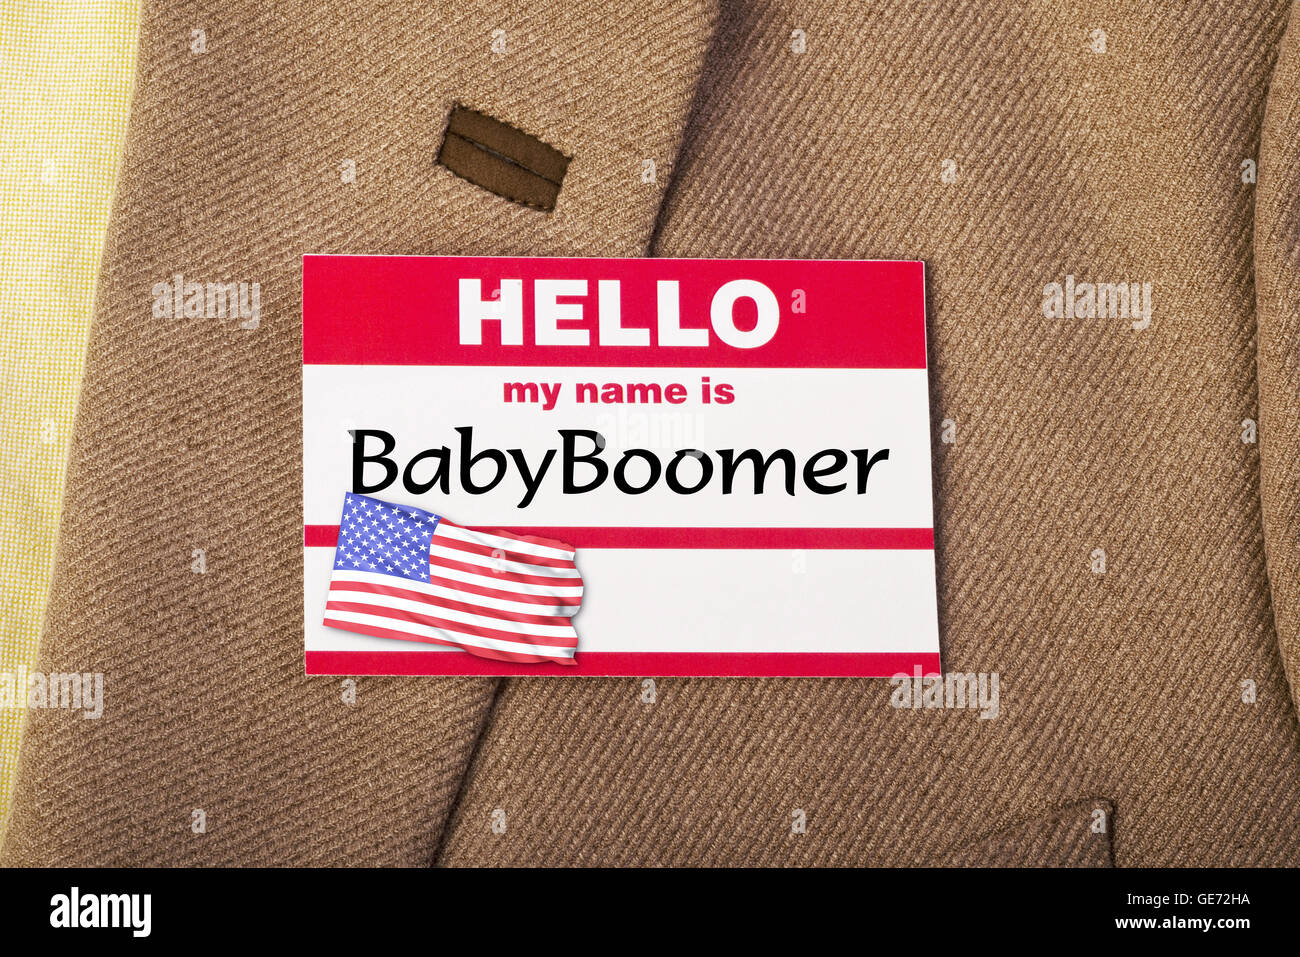 My name is Baby Boomer. Stock Photo